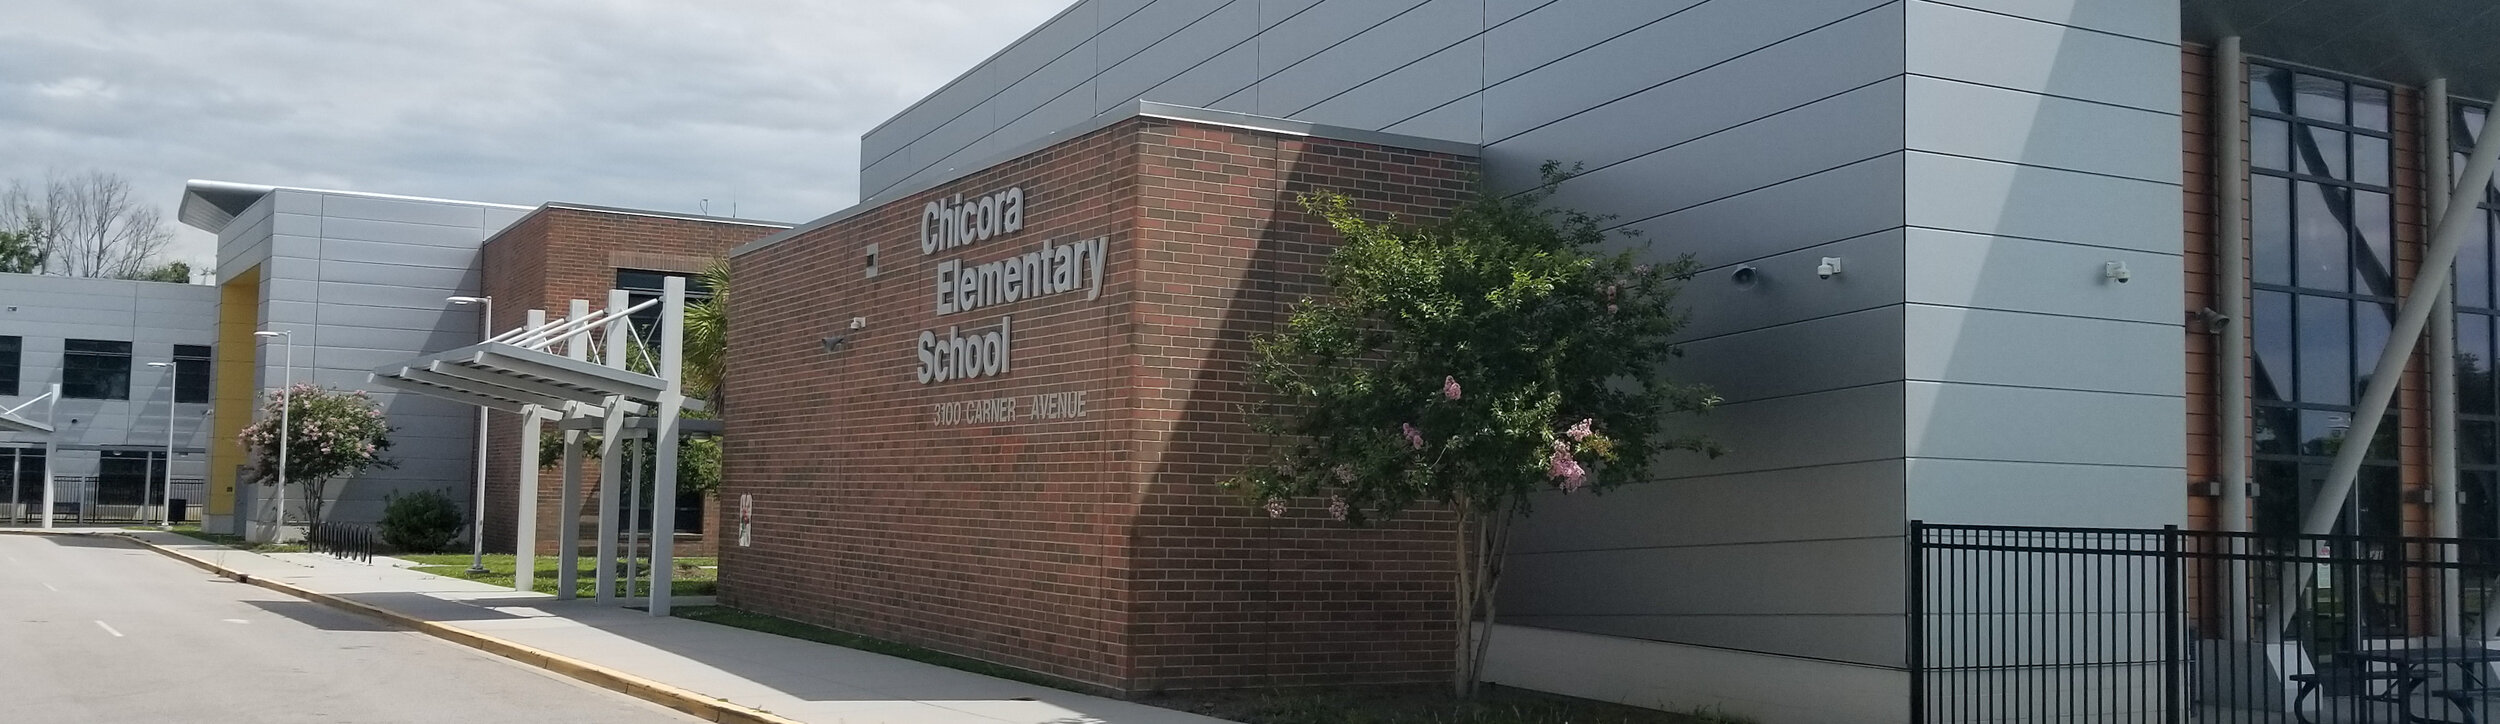 Chicora Elementary School, Charleston, South Carolina